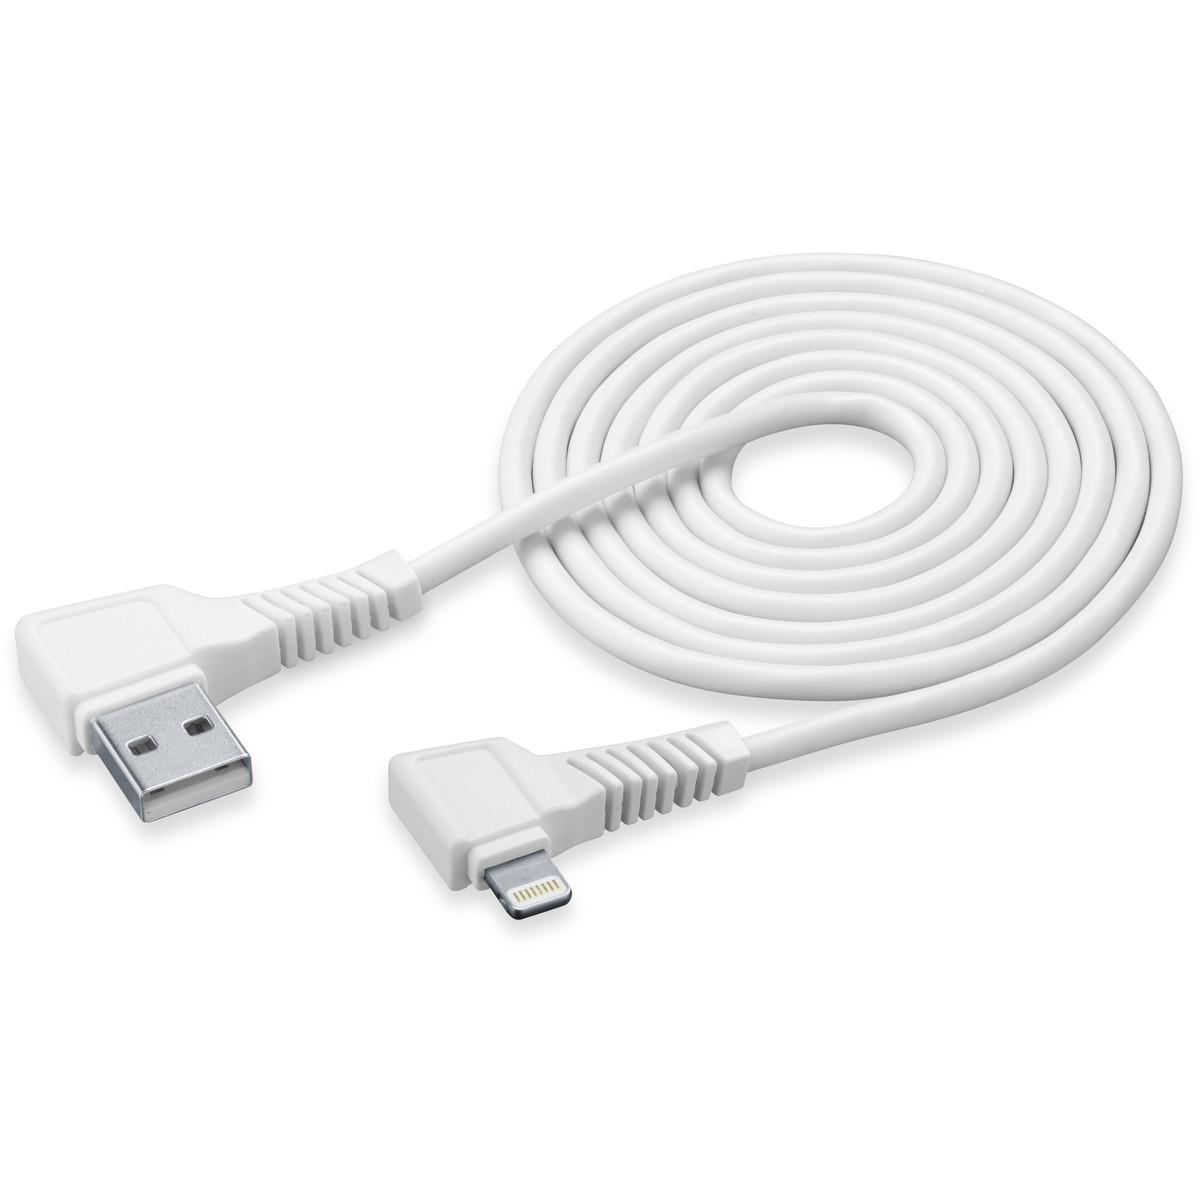 Lade- und Datenkabel ANGLE 200cm USB Type-A auf Apple Lightning